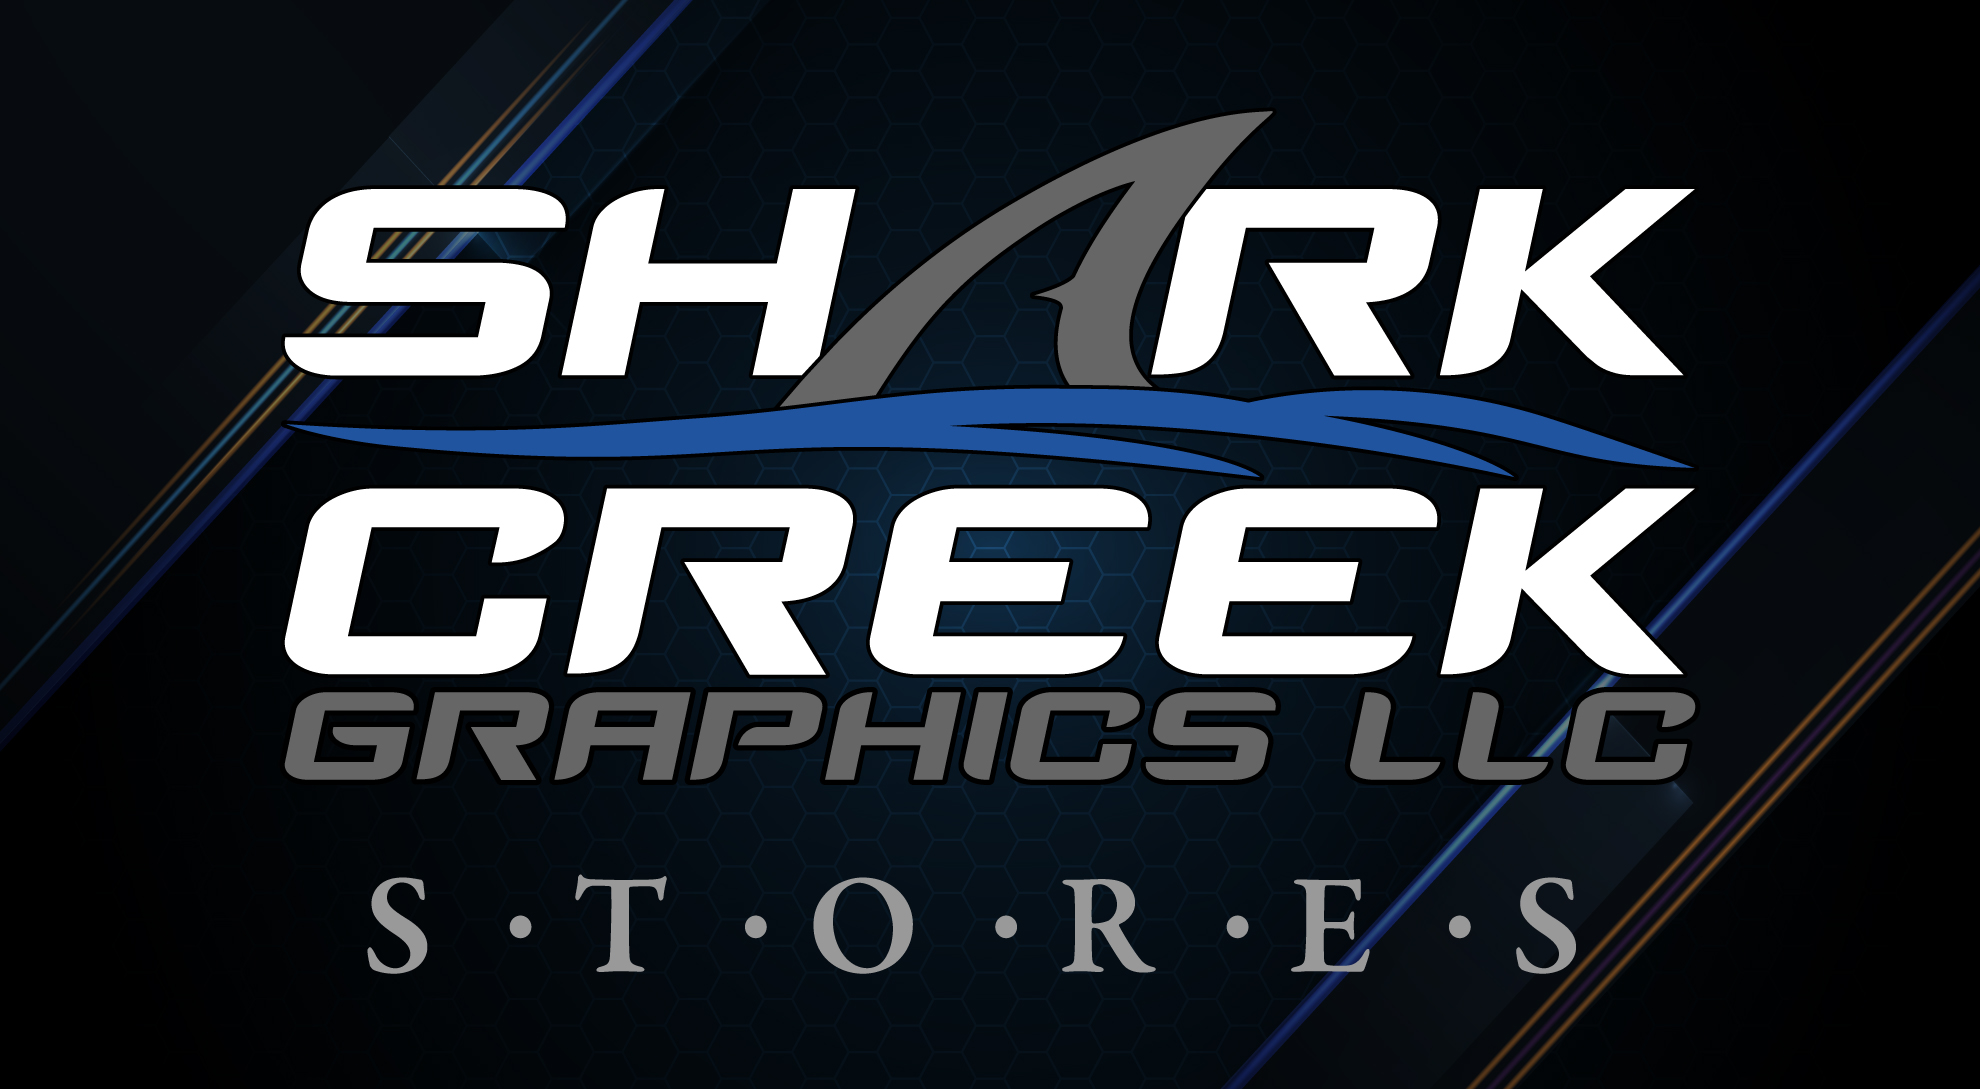 Shark Creek Graphics, LLC